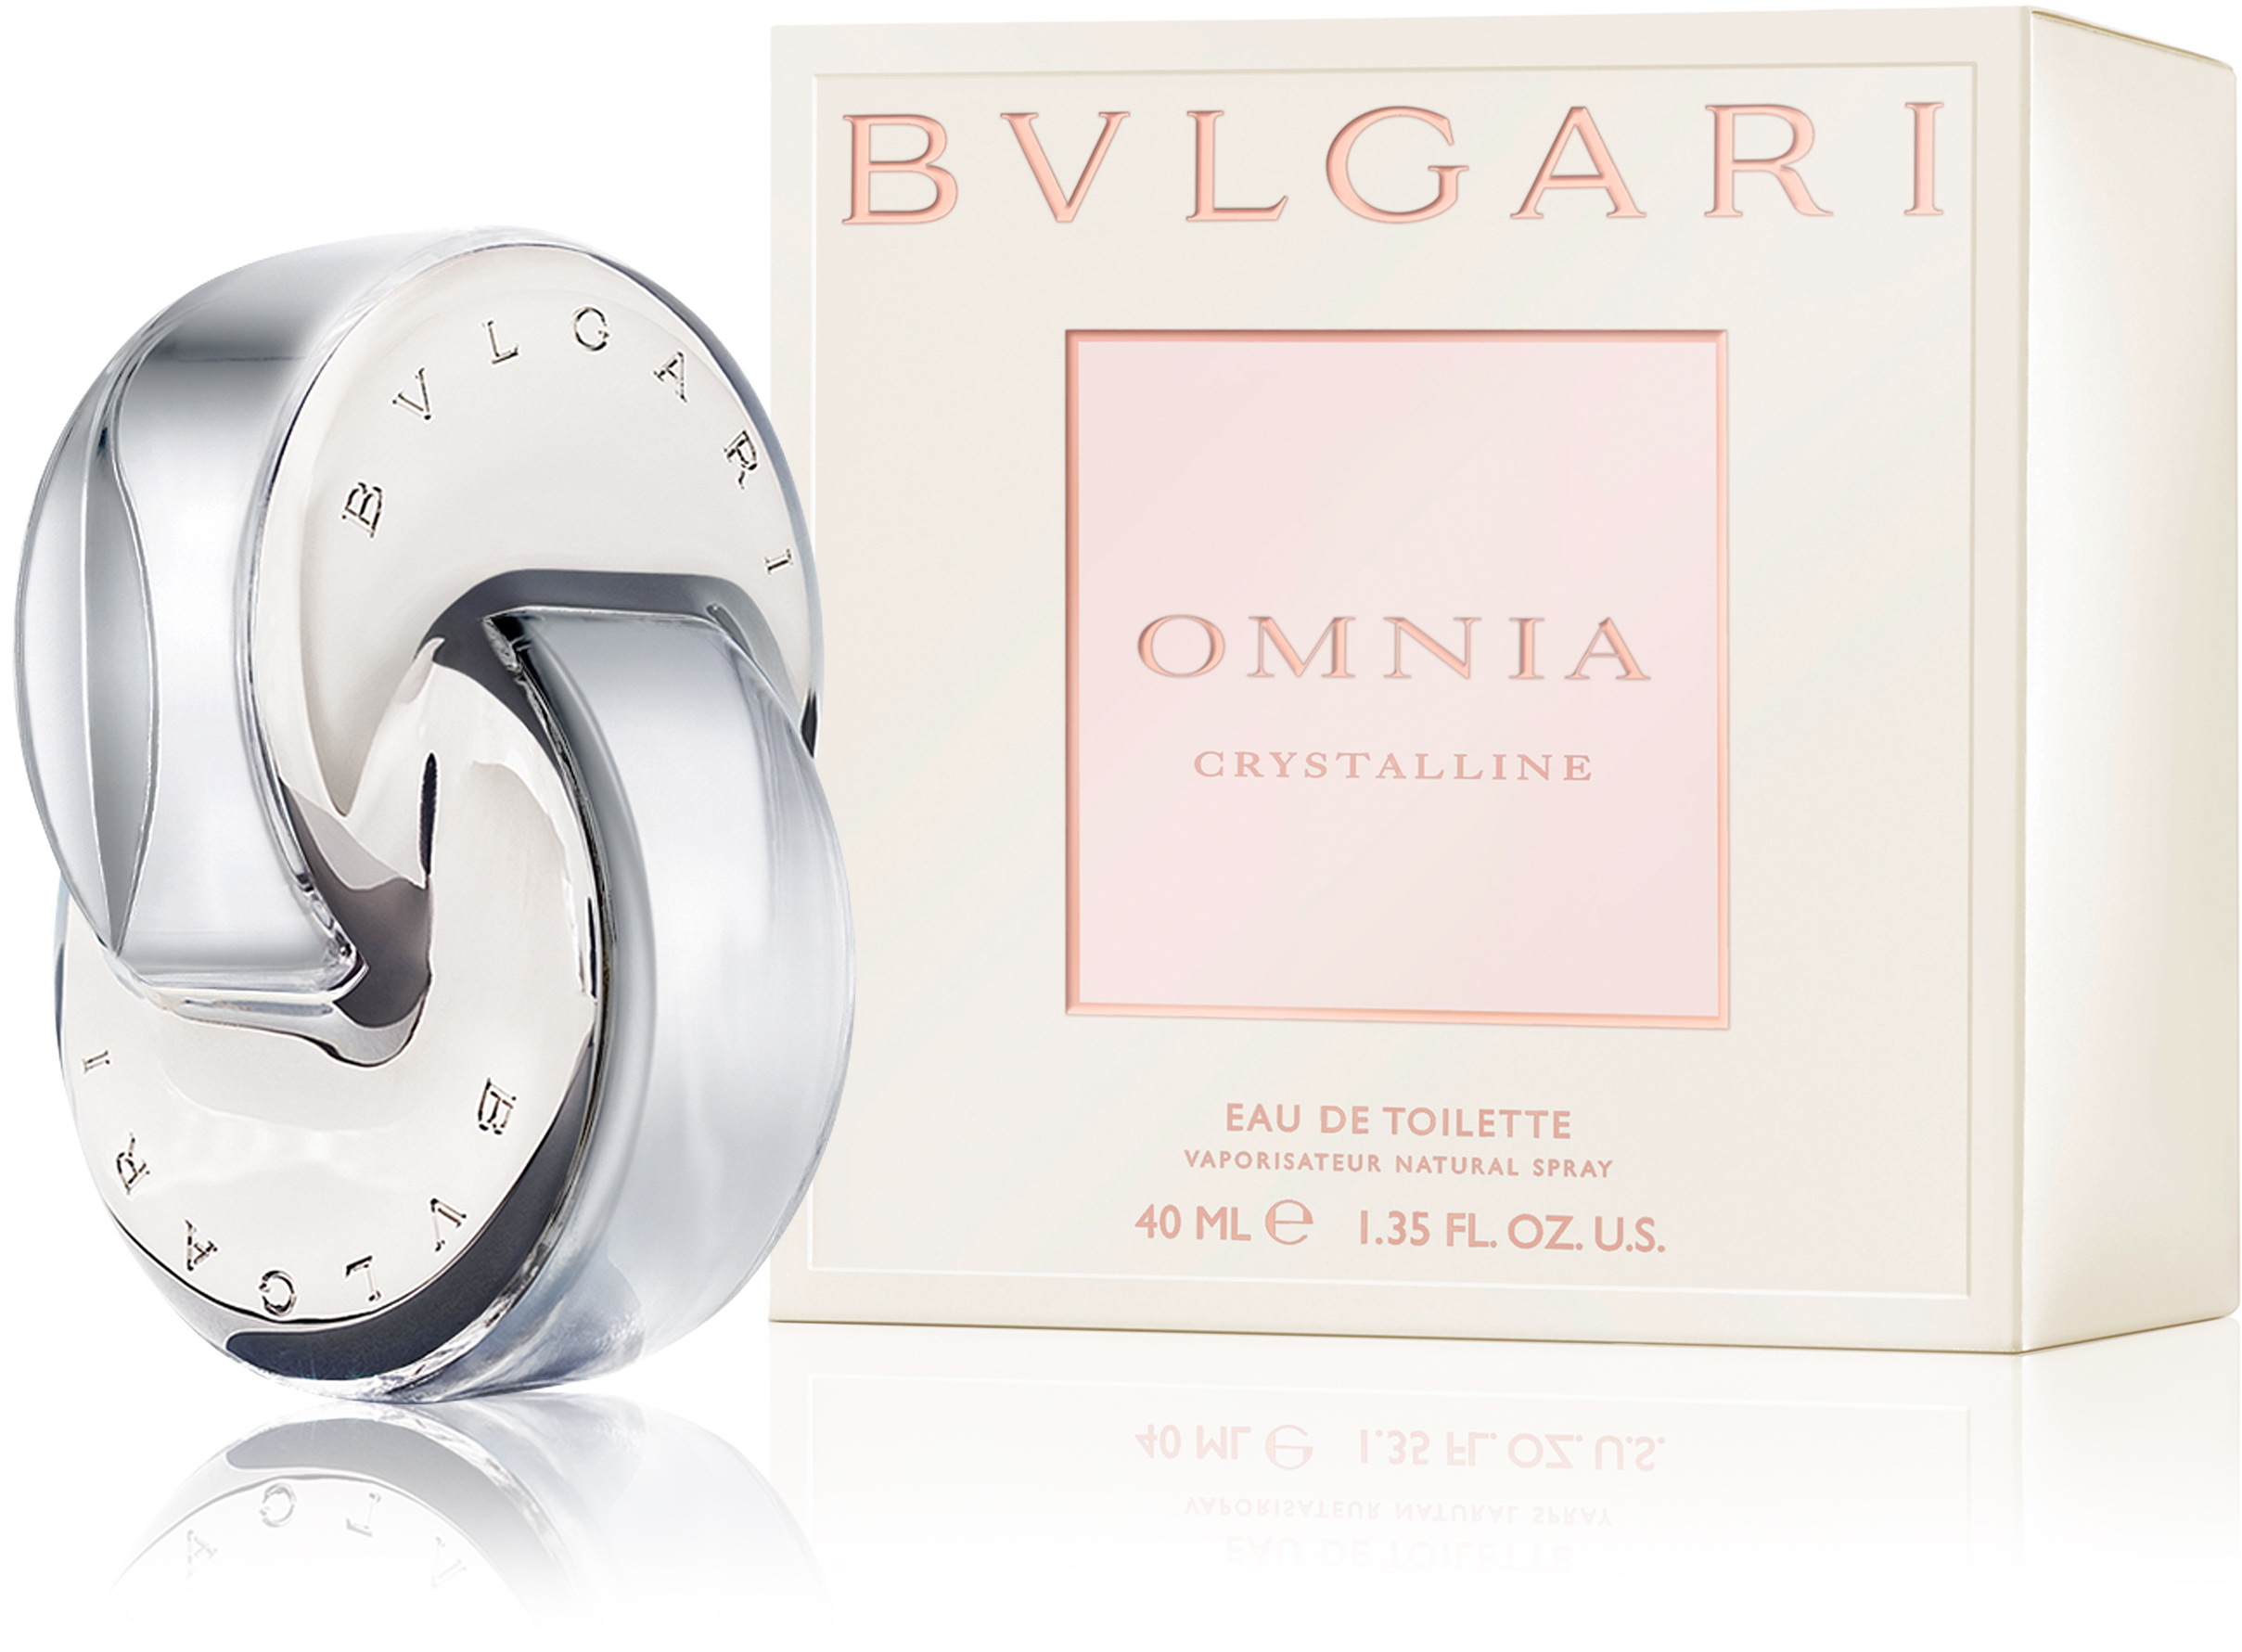 Bvlgari Omnia Crystalline 40ml in duty 